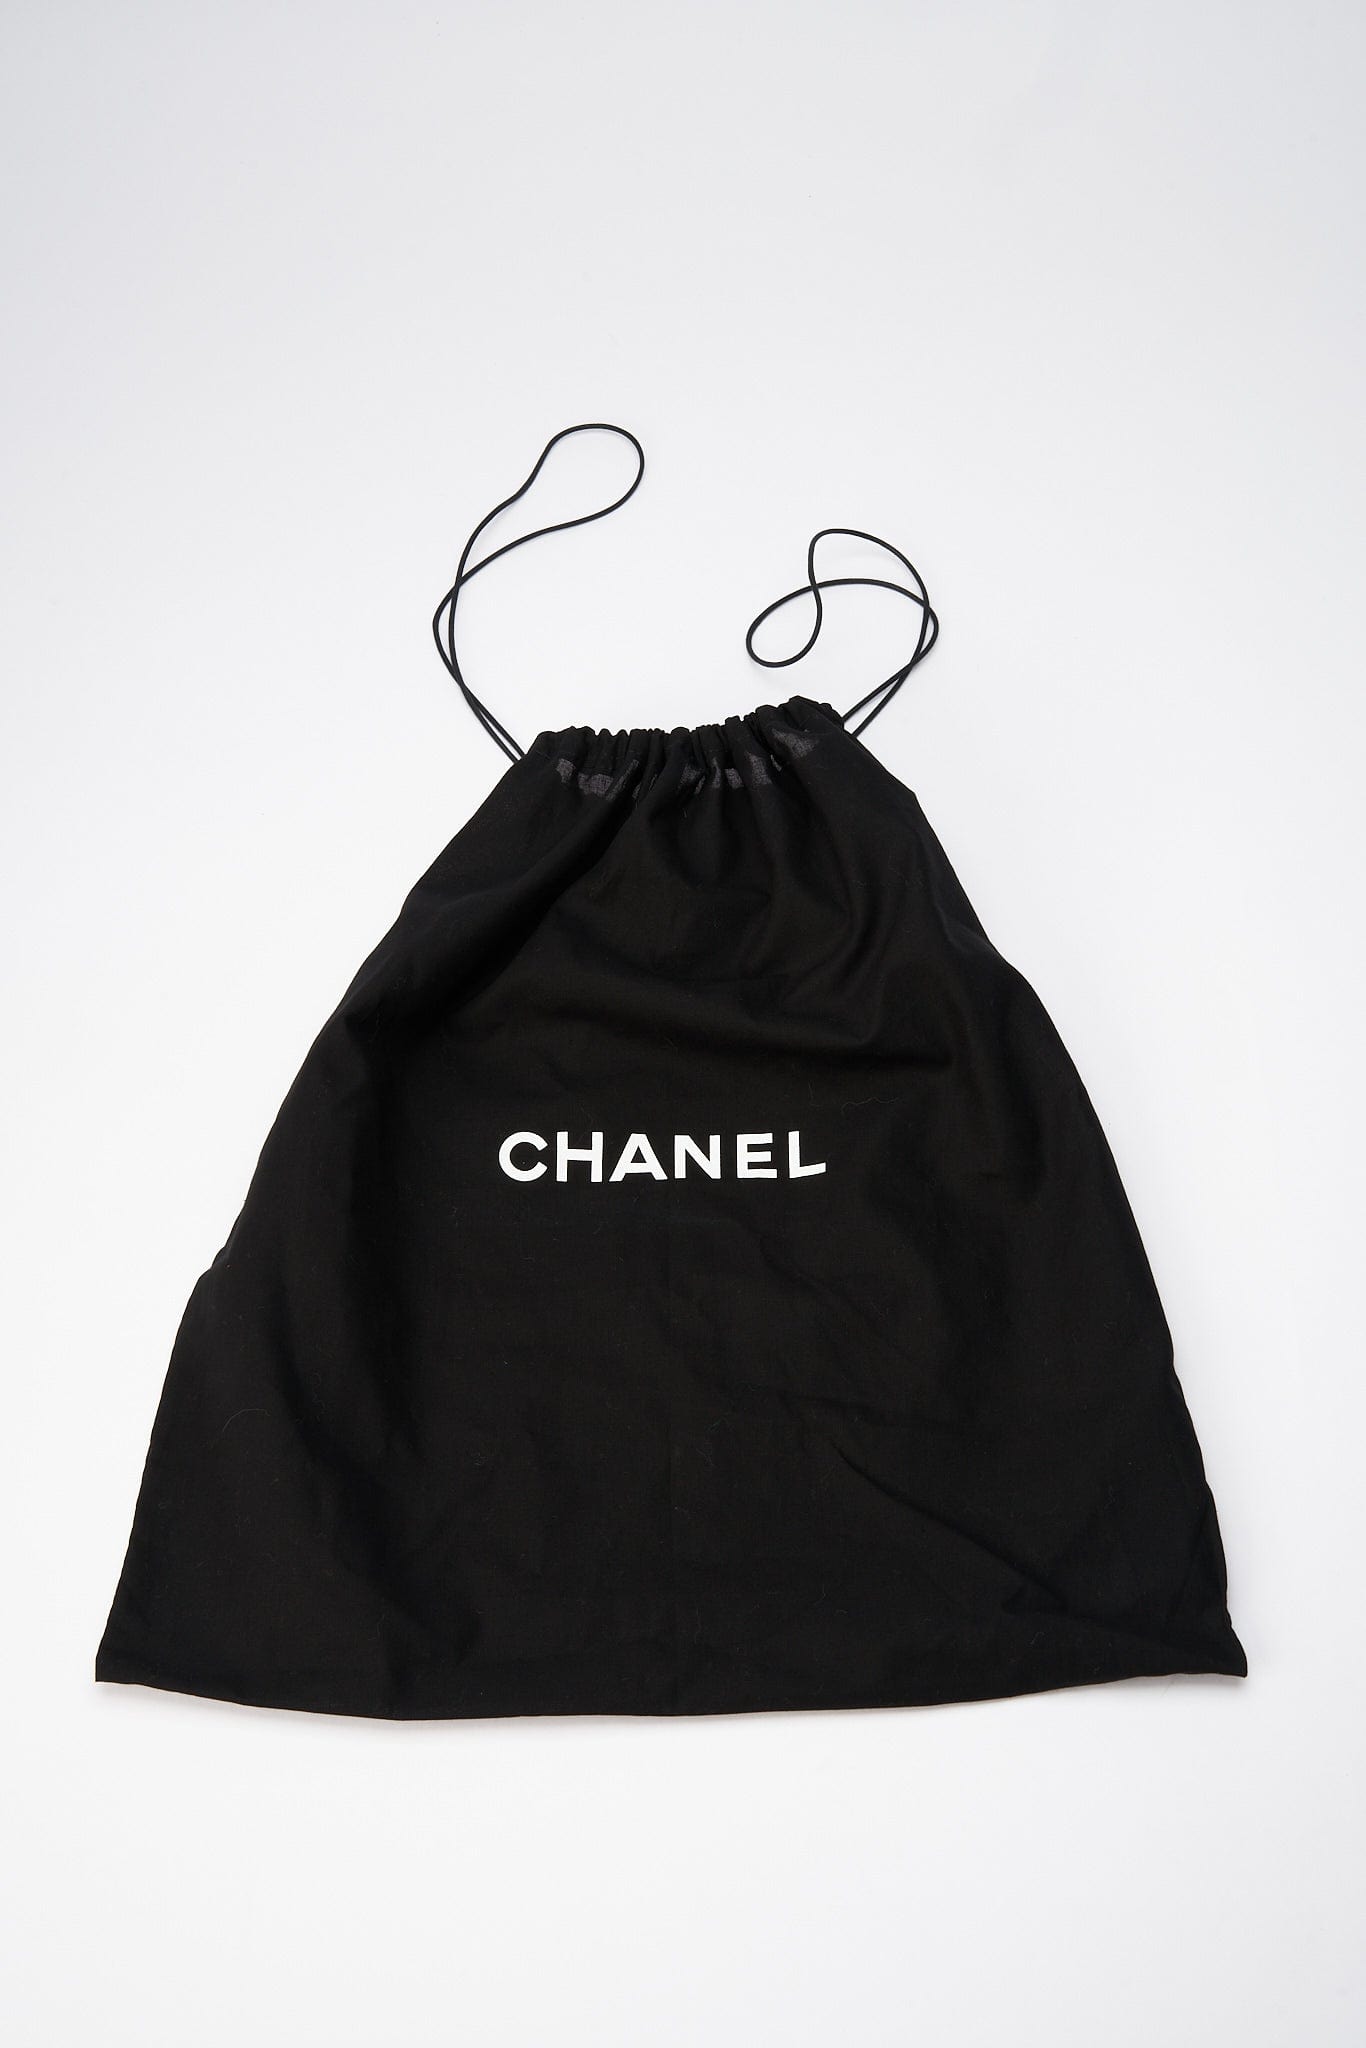 Chanel Black Nylon Chocolate Bar Flap Bag 1815